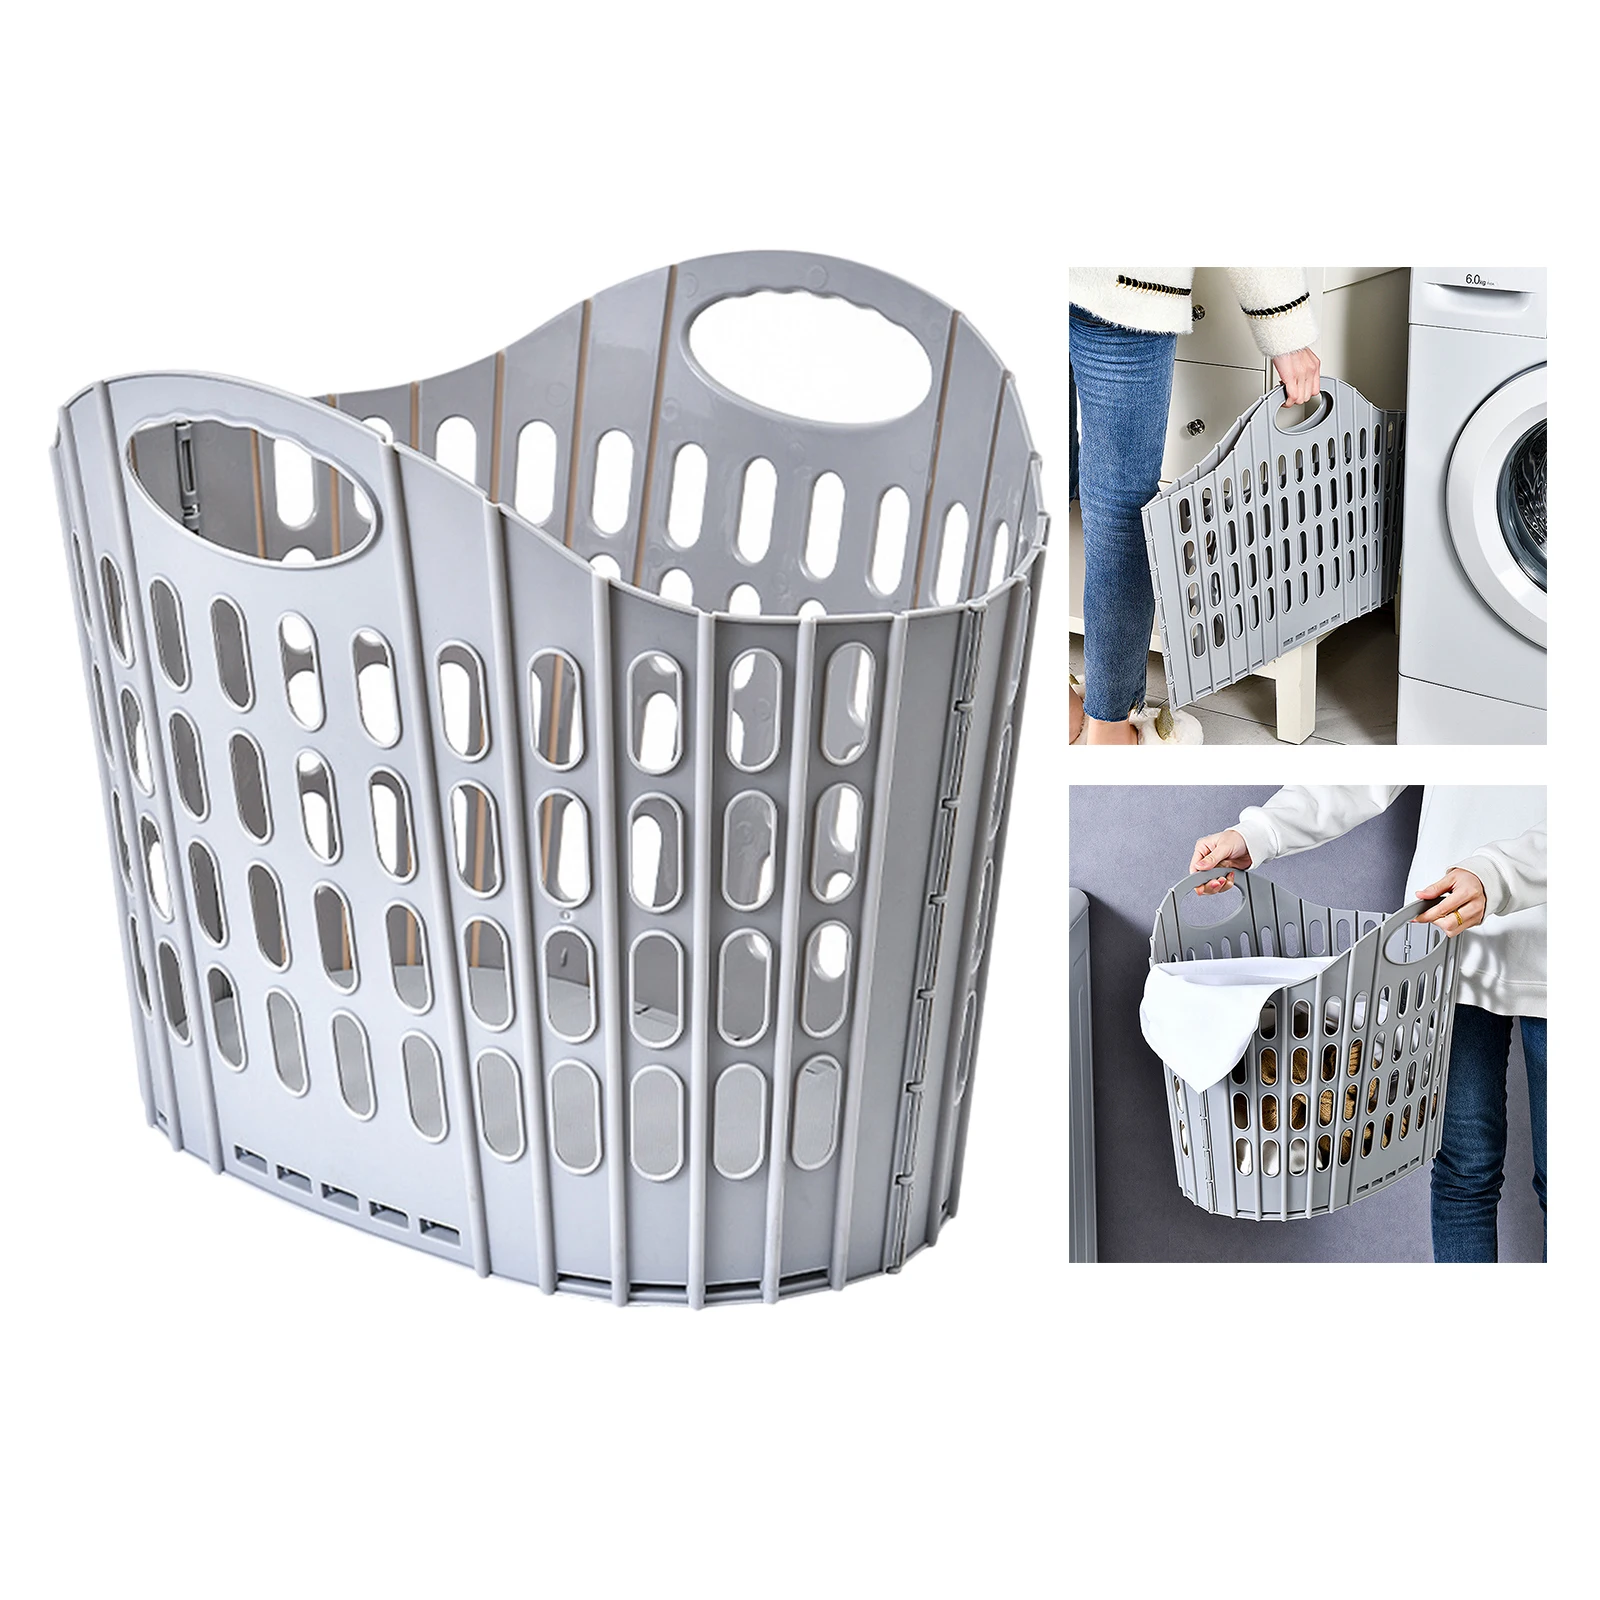 Details about   US Laundry Hamper Basket Washing Dirty es Bin Storage Bag Organizer 